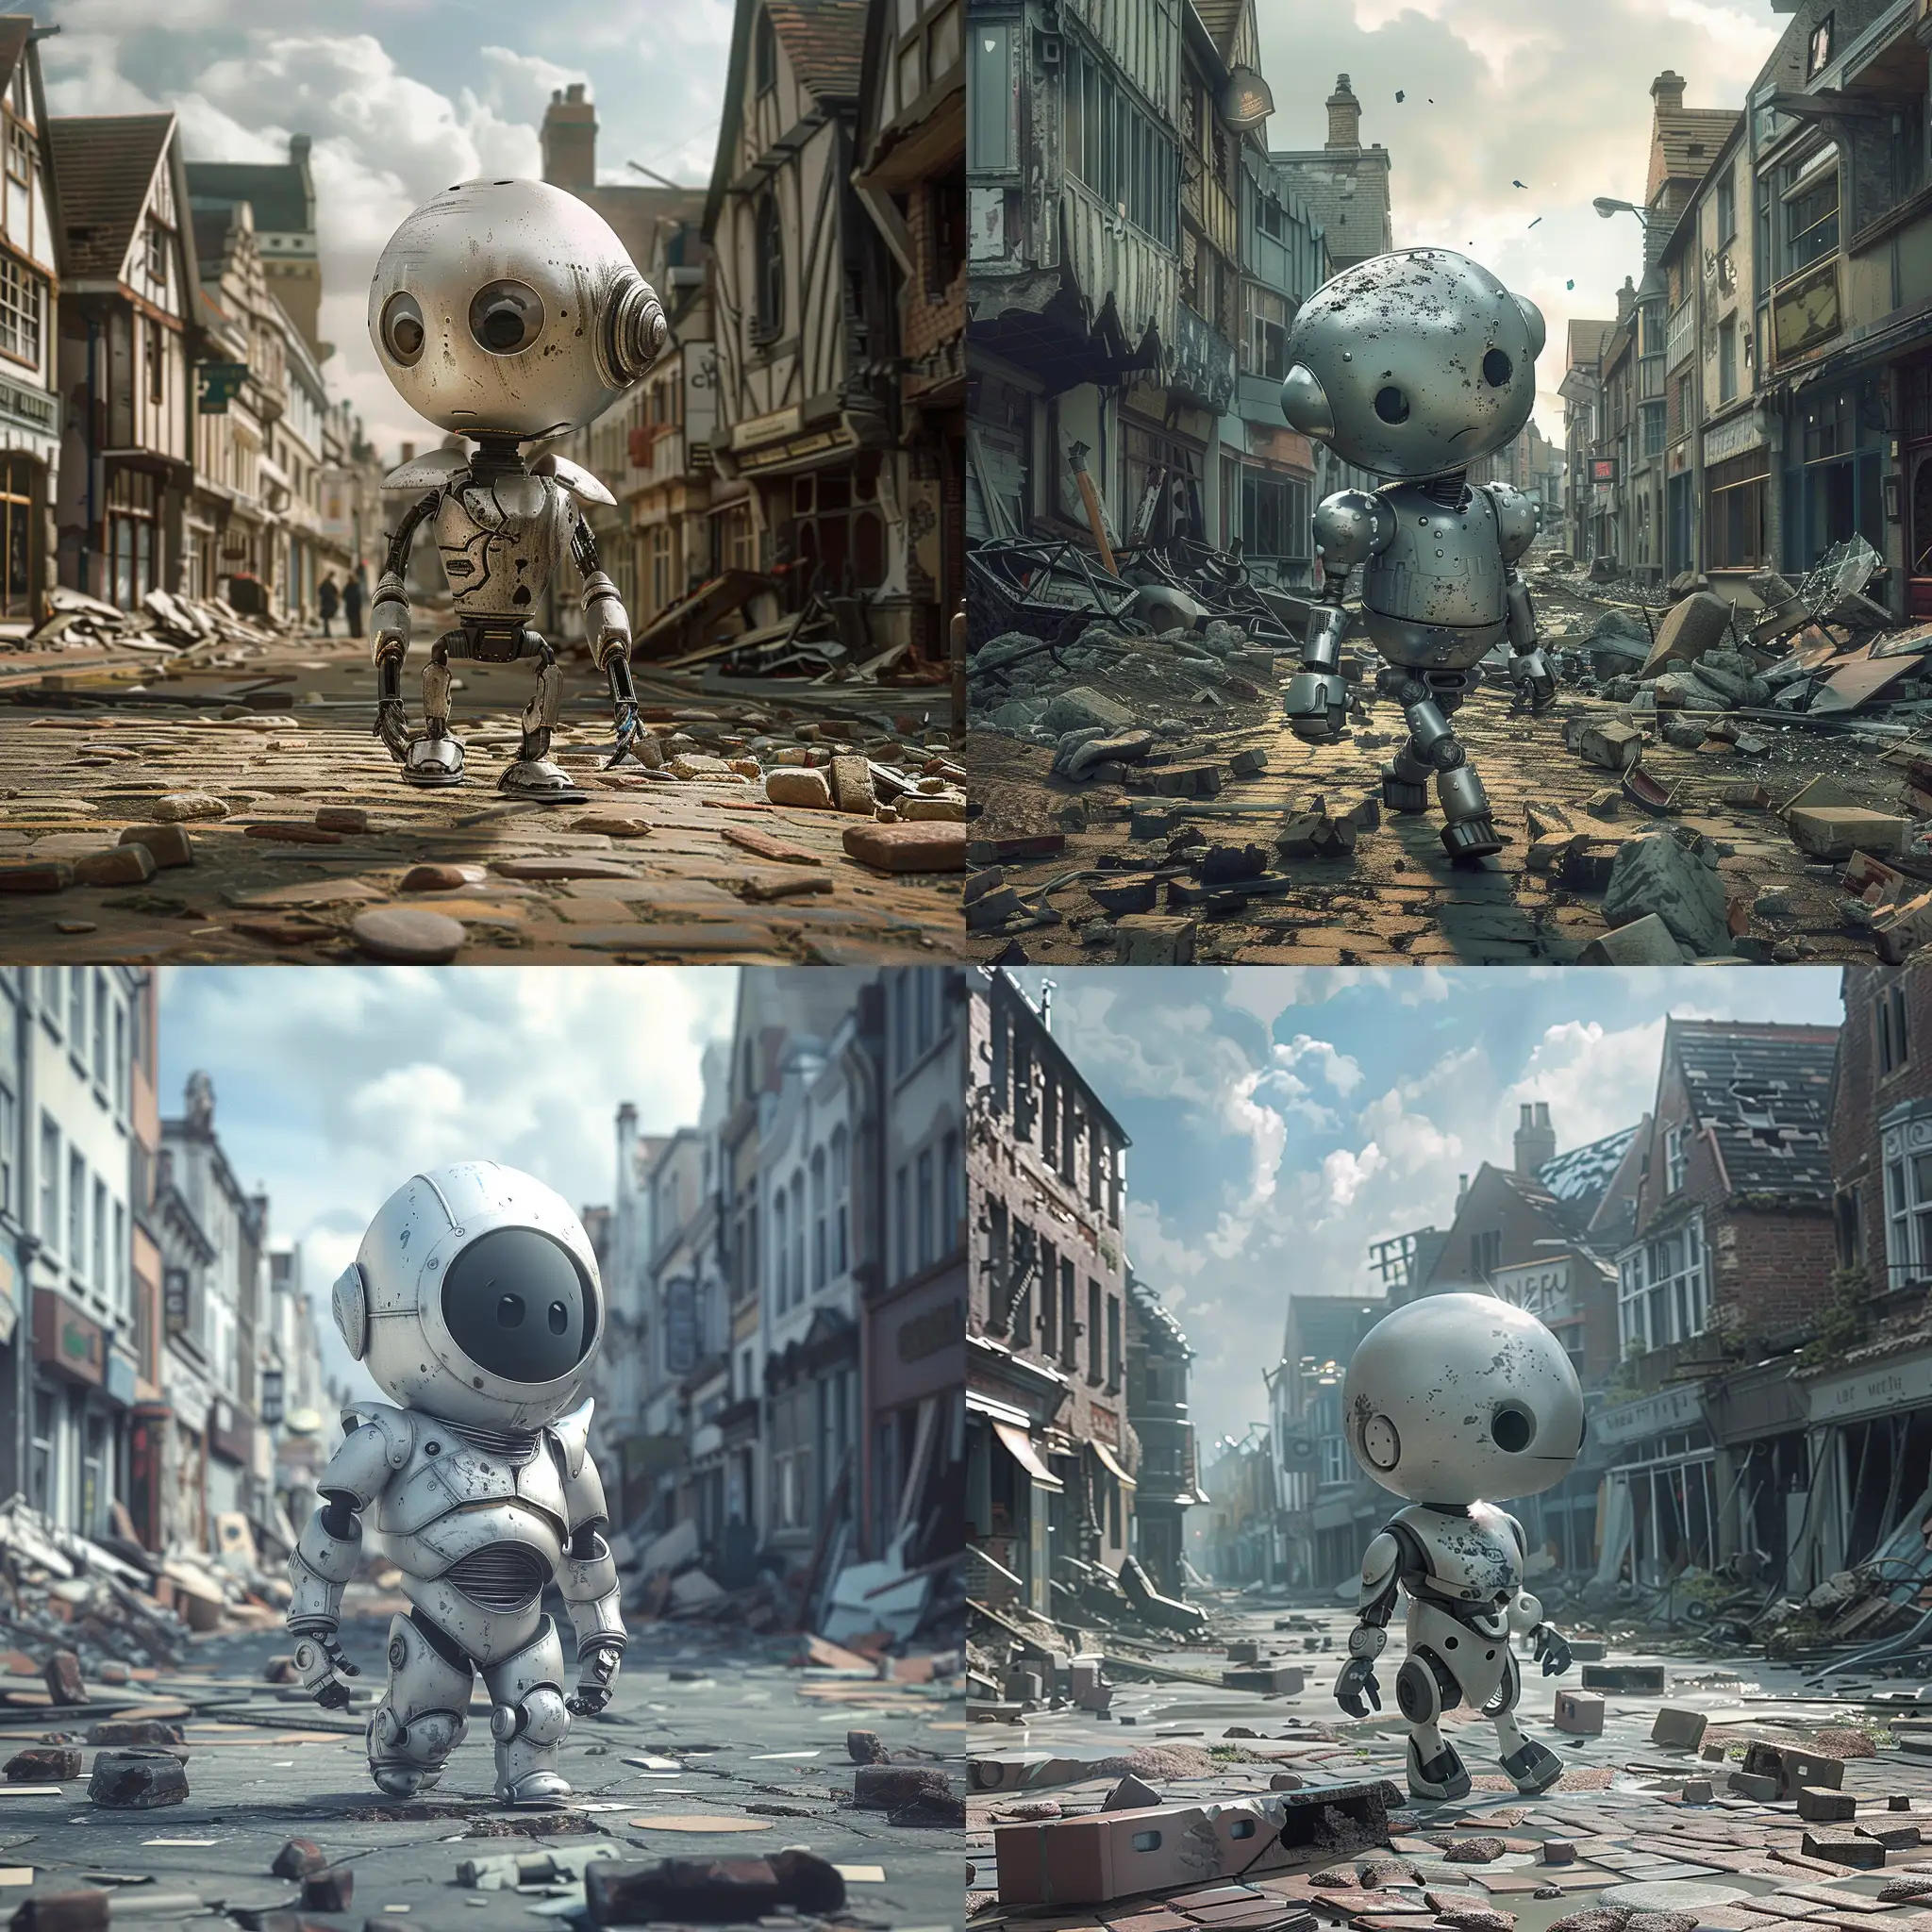 Futuristic-Apocalyptic-Robot-Walking-through-Chelmsford-High-Street-Essex